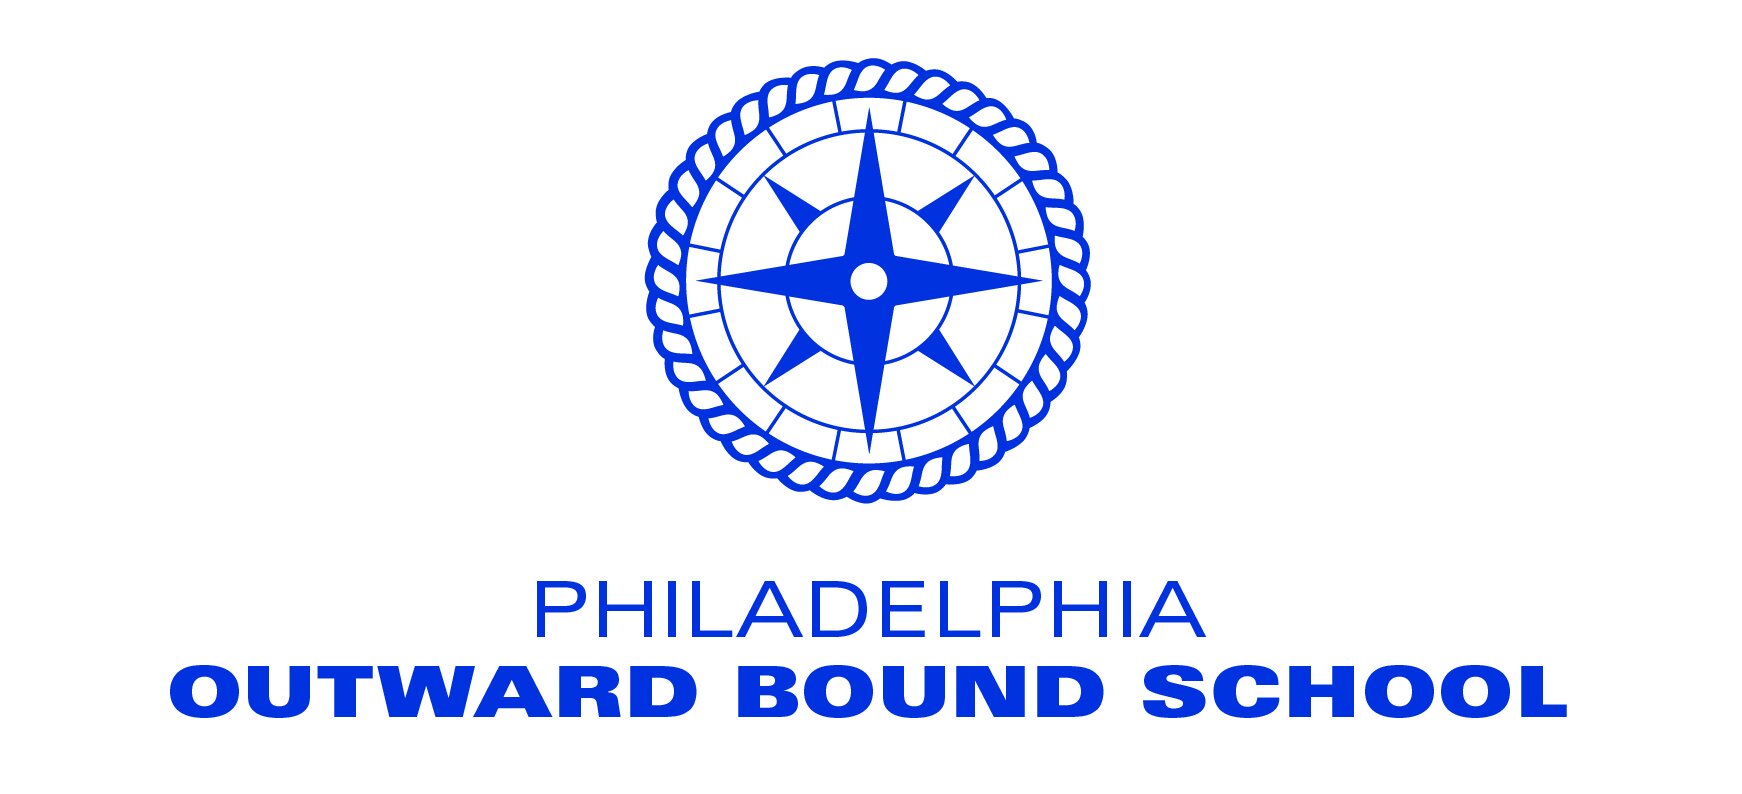 Philadelphia Outward Bound School